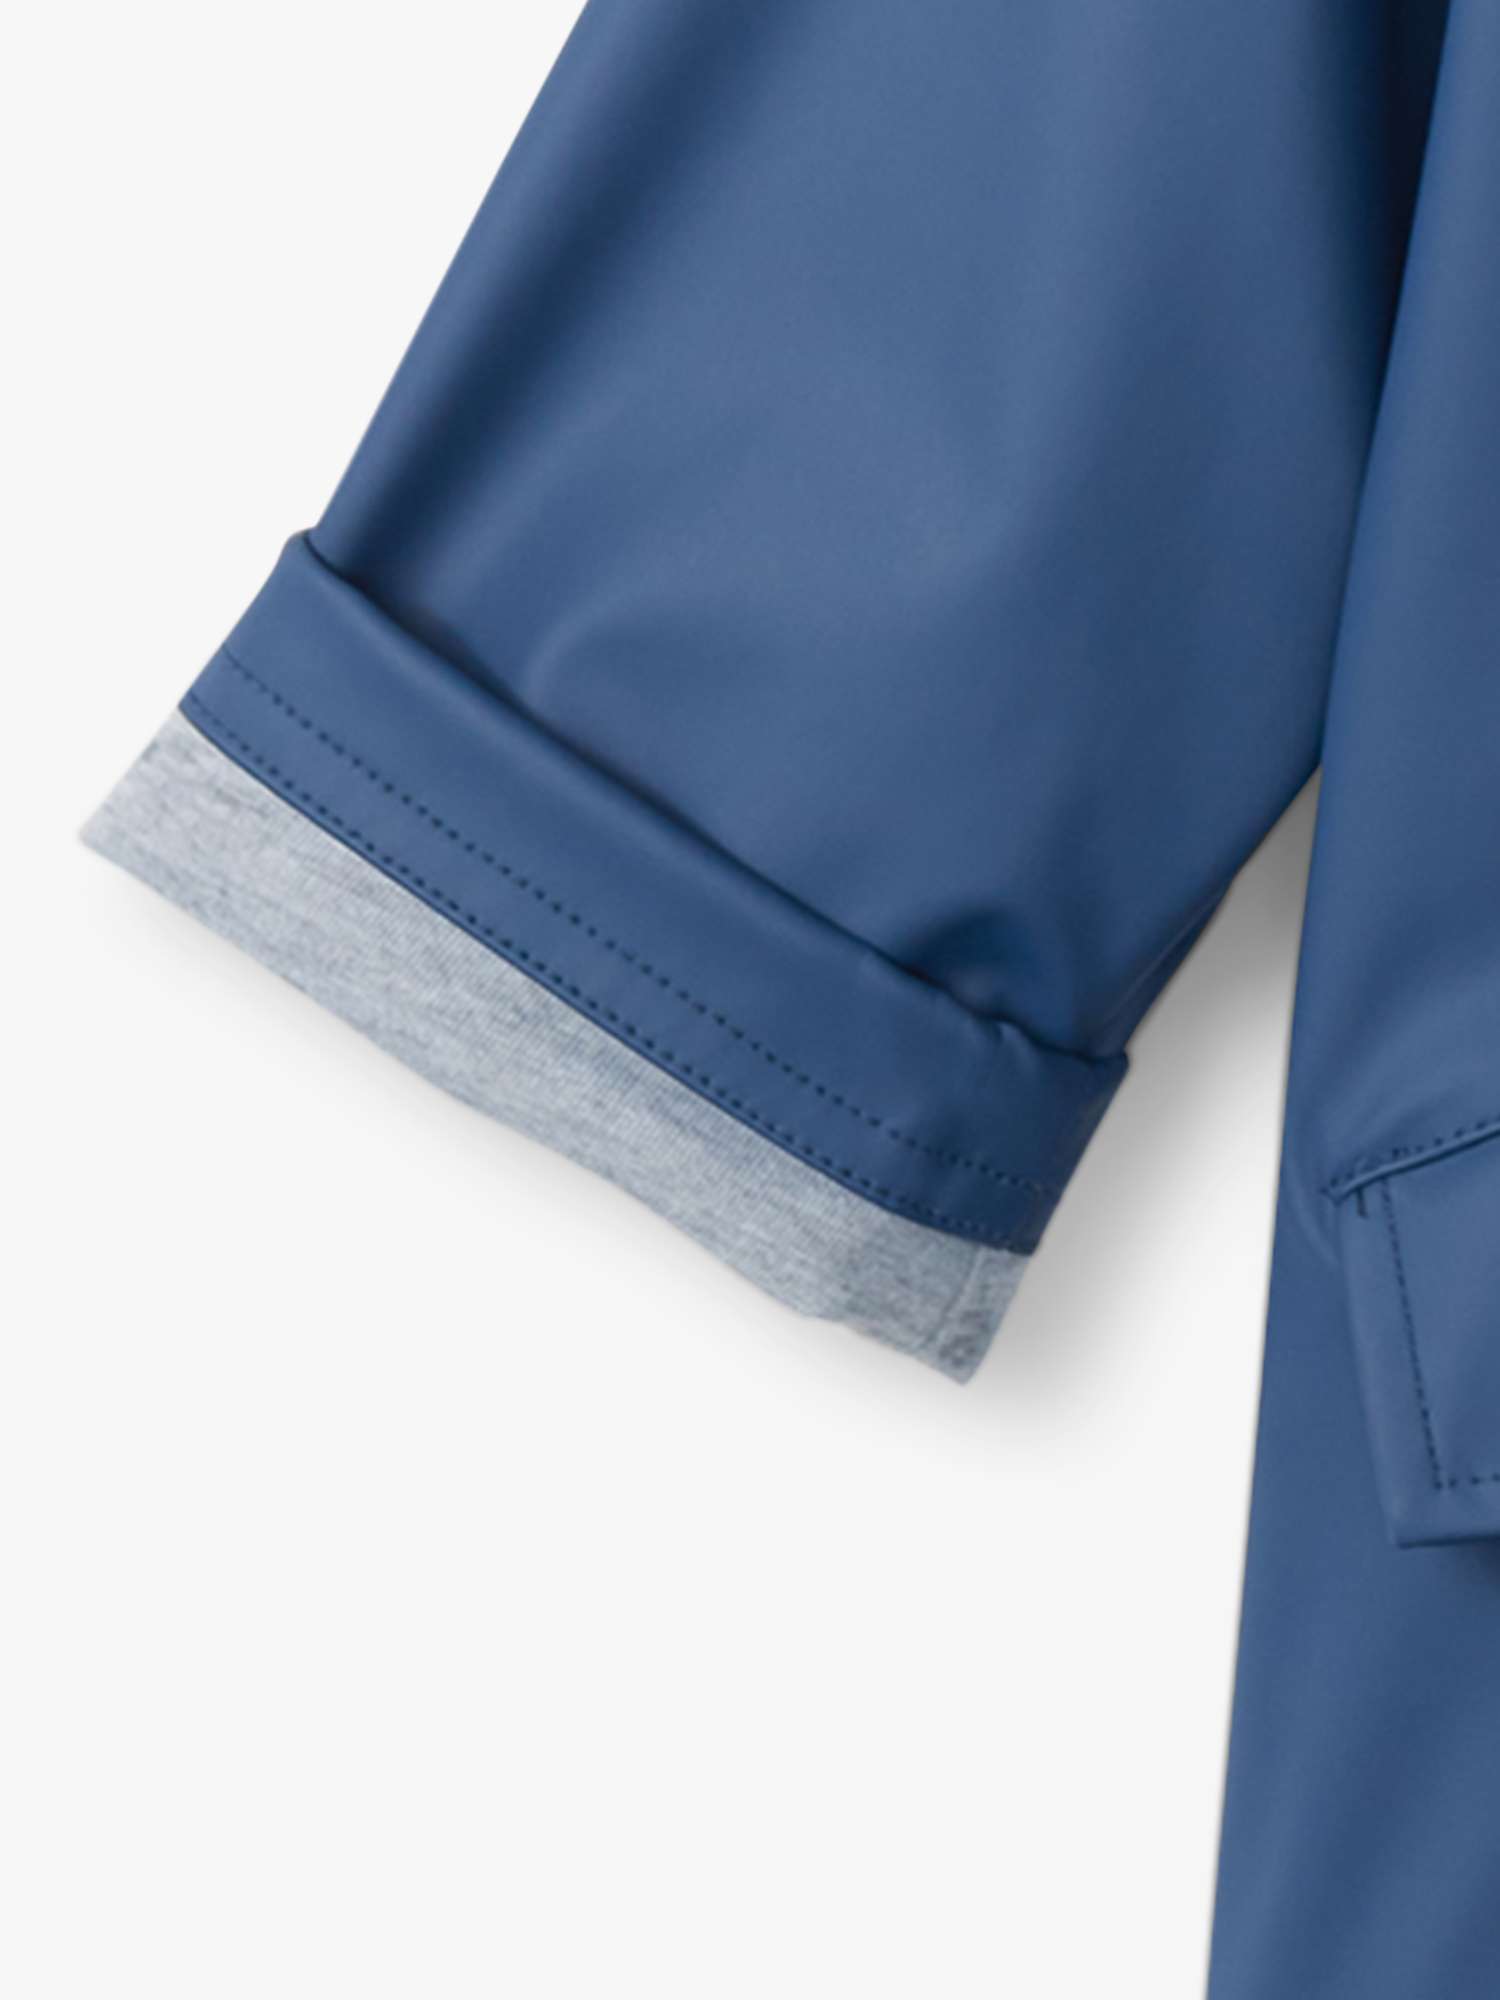 Buy Hatley Kids' Mariner Colour Block Zip Up Hooded Rain Jacket, Yellow/Blue Online at johnlewis.com